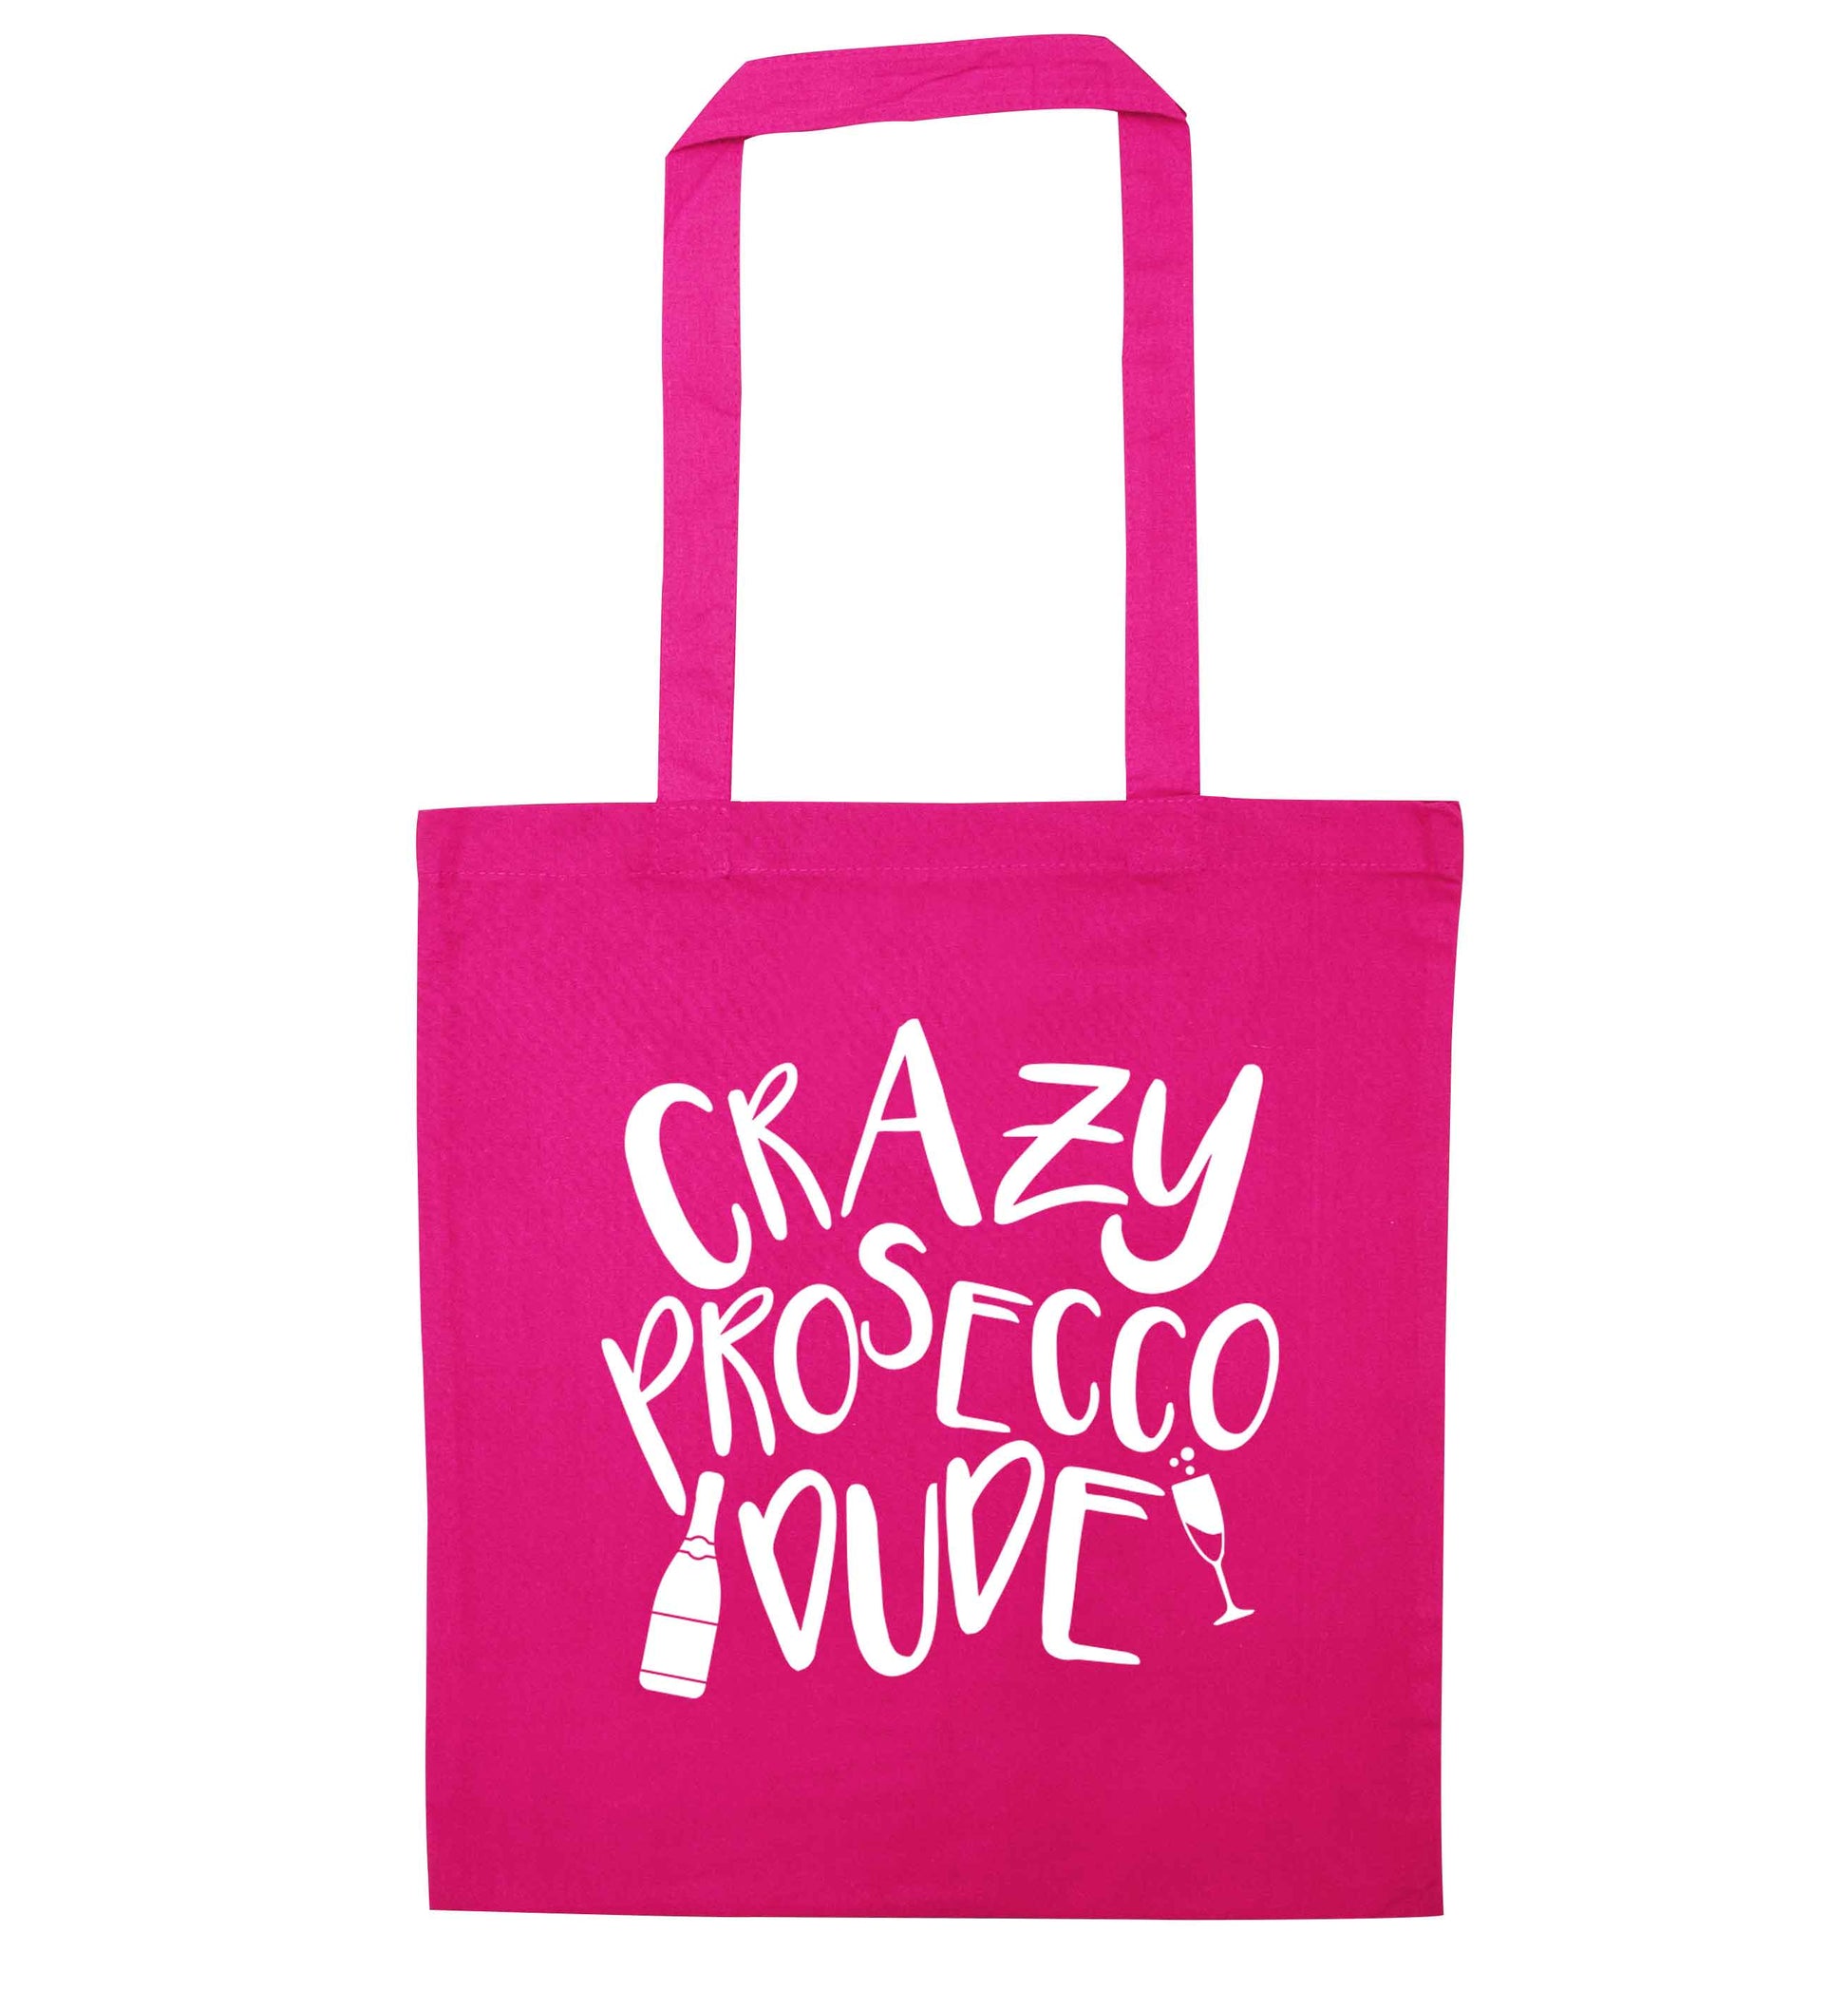 Crazy prosecco dude pink tote bag